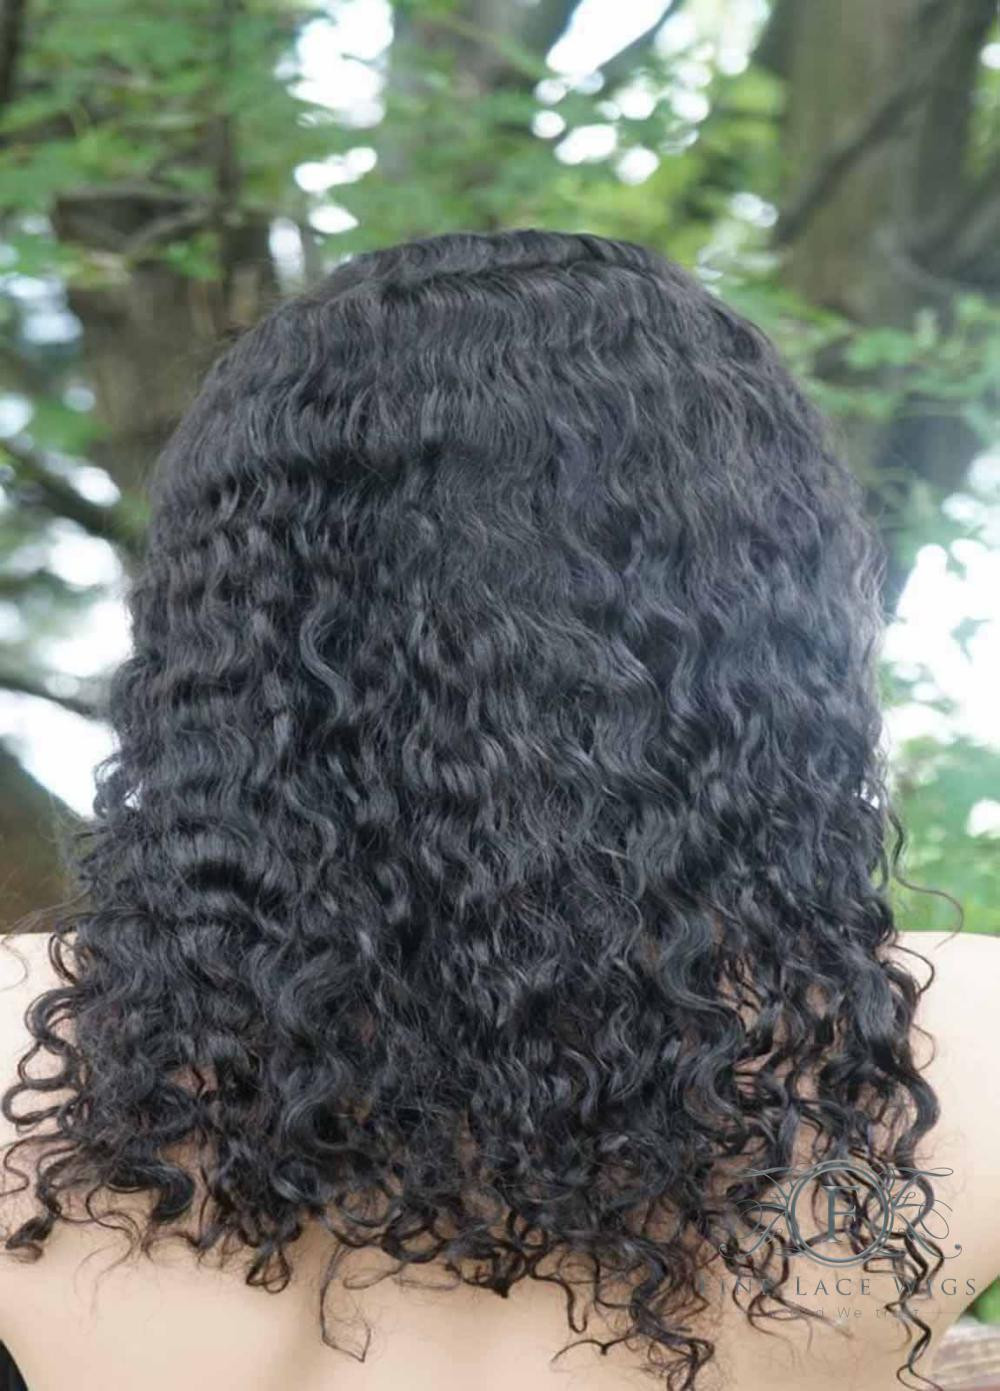 Curly Human Hair Wigs